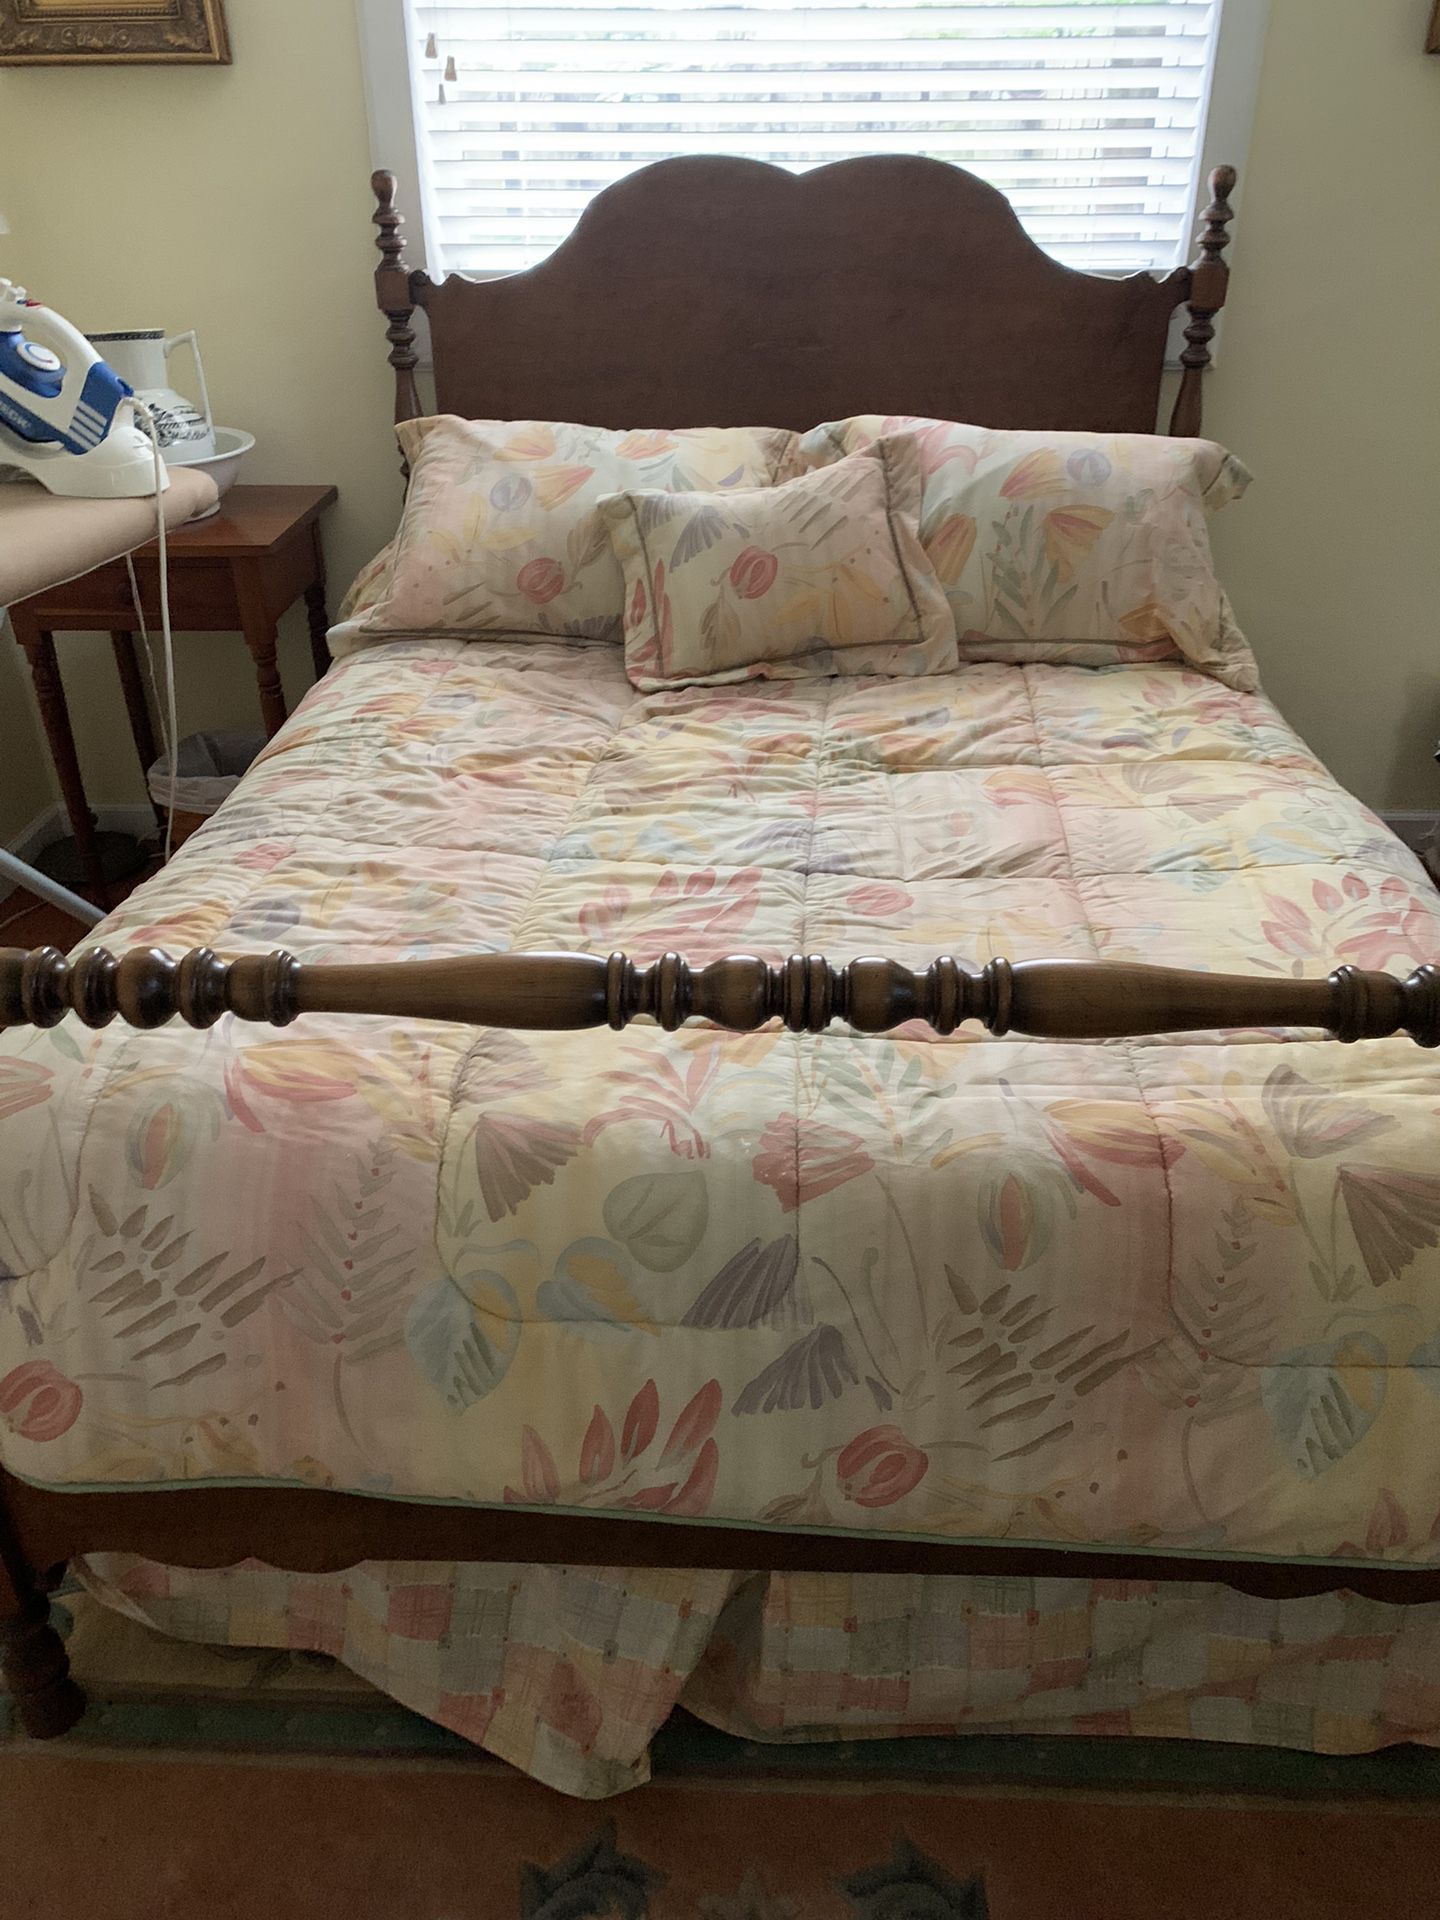 Antique Bed 